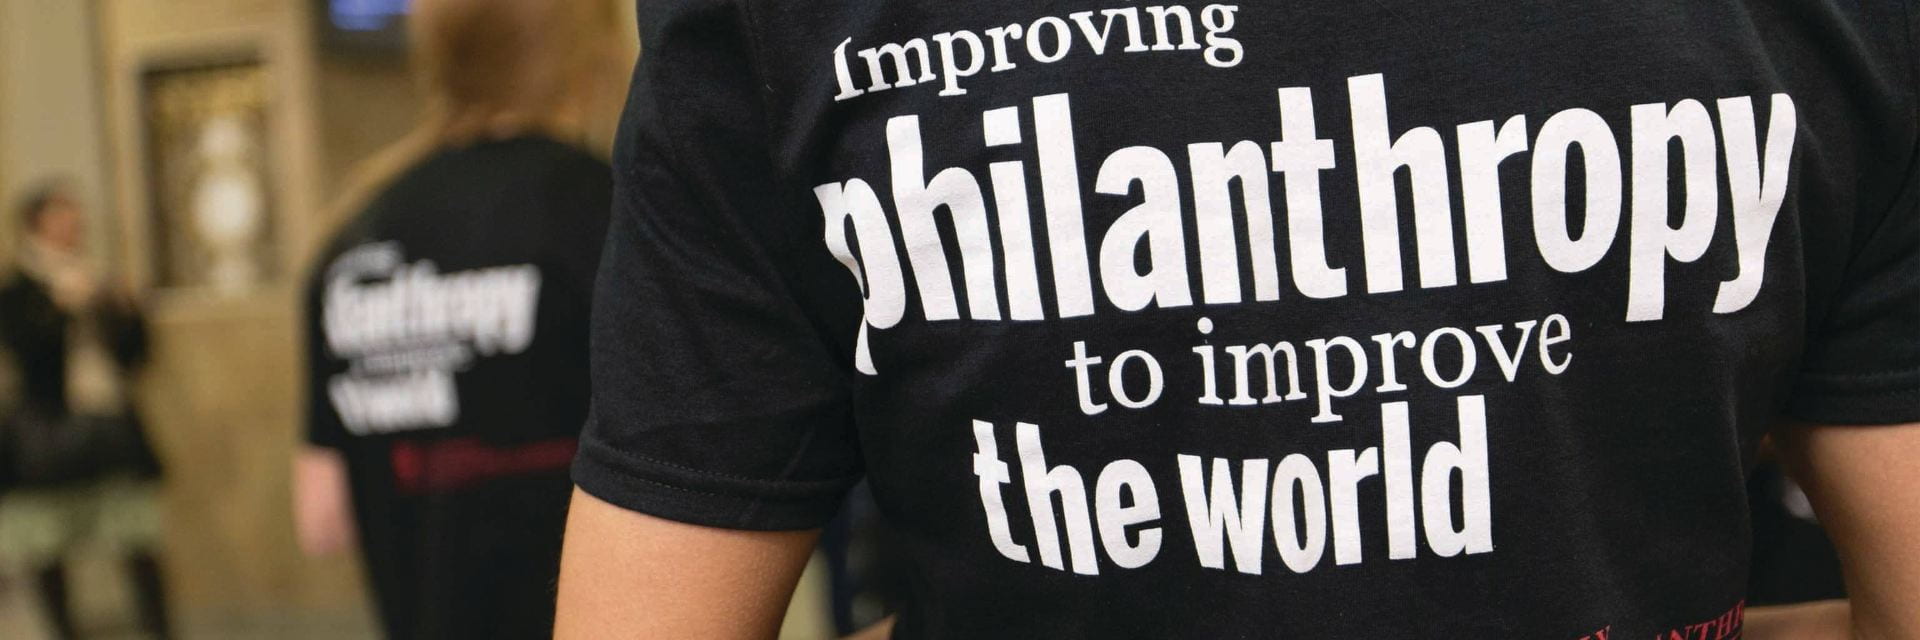 improve philanthropy, improve world